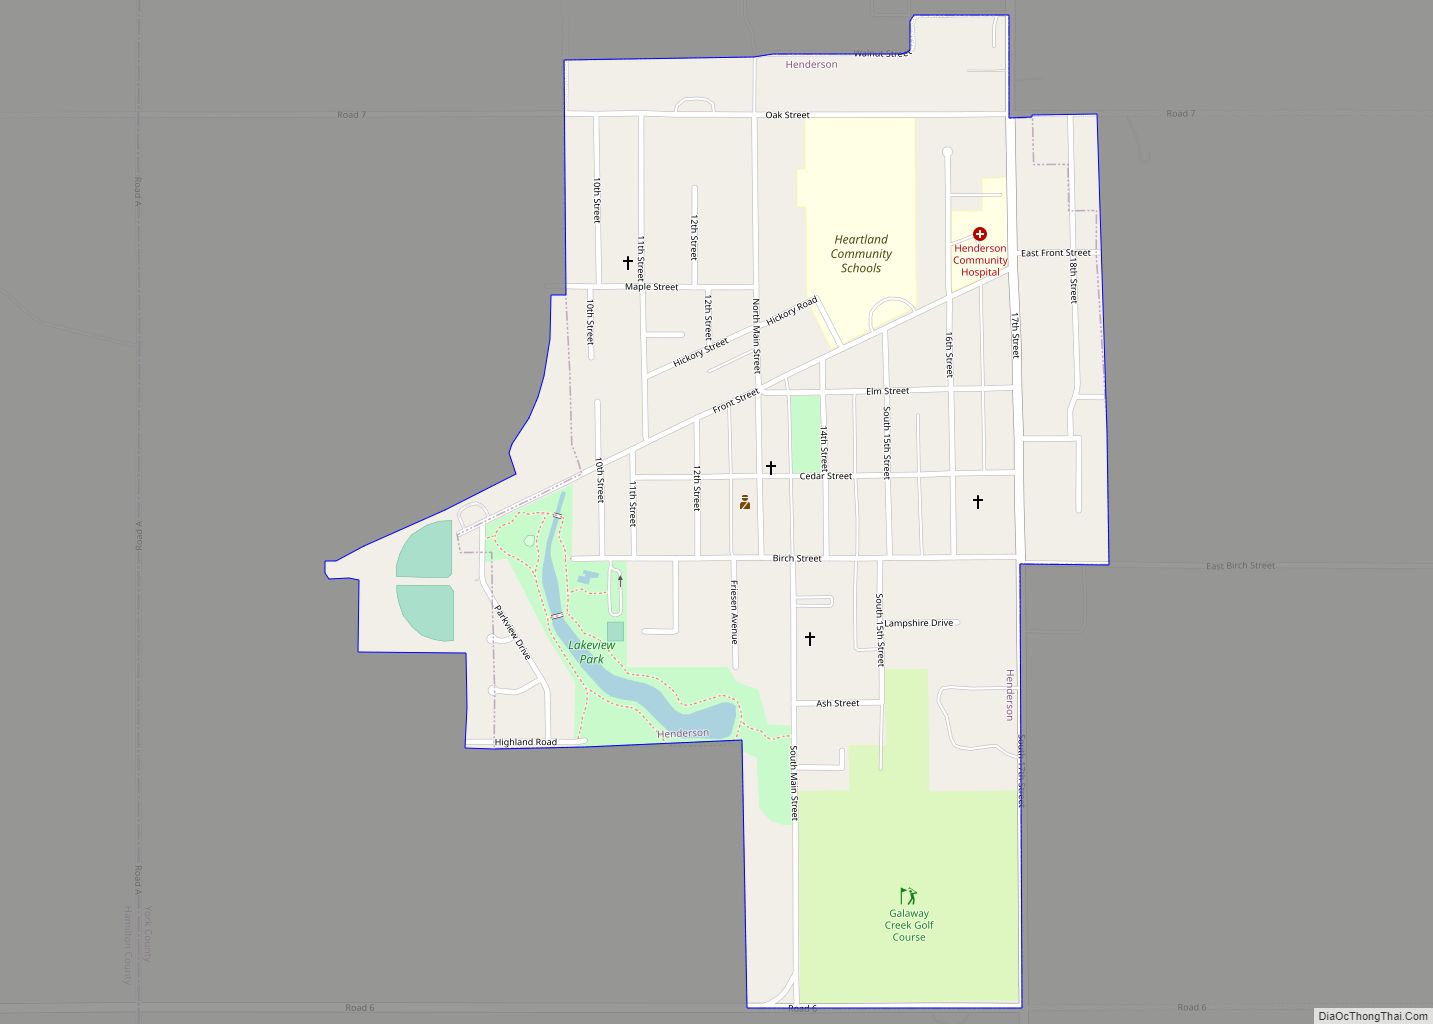 Map of Henderson city, Nebraska